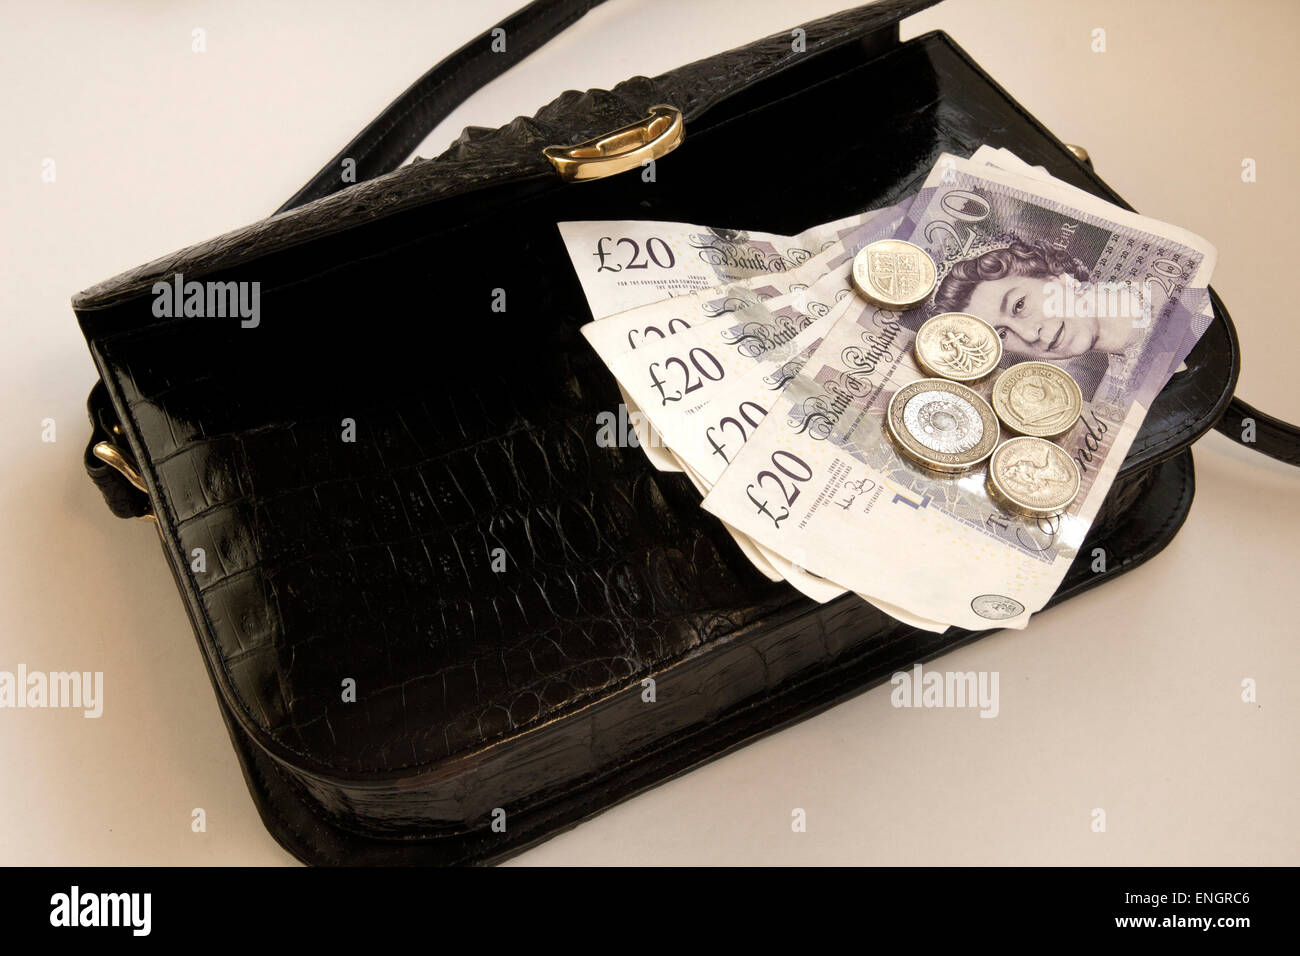 British Pound Notes£20 and 1 and 2 pound coins on Black Crocodile skin Handbag, gilt clasp Stock Photo